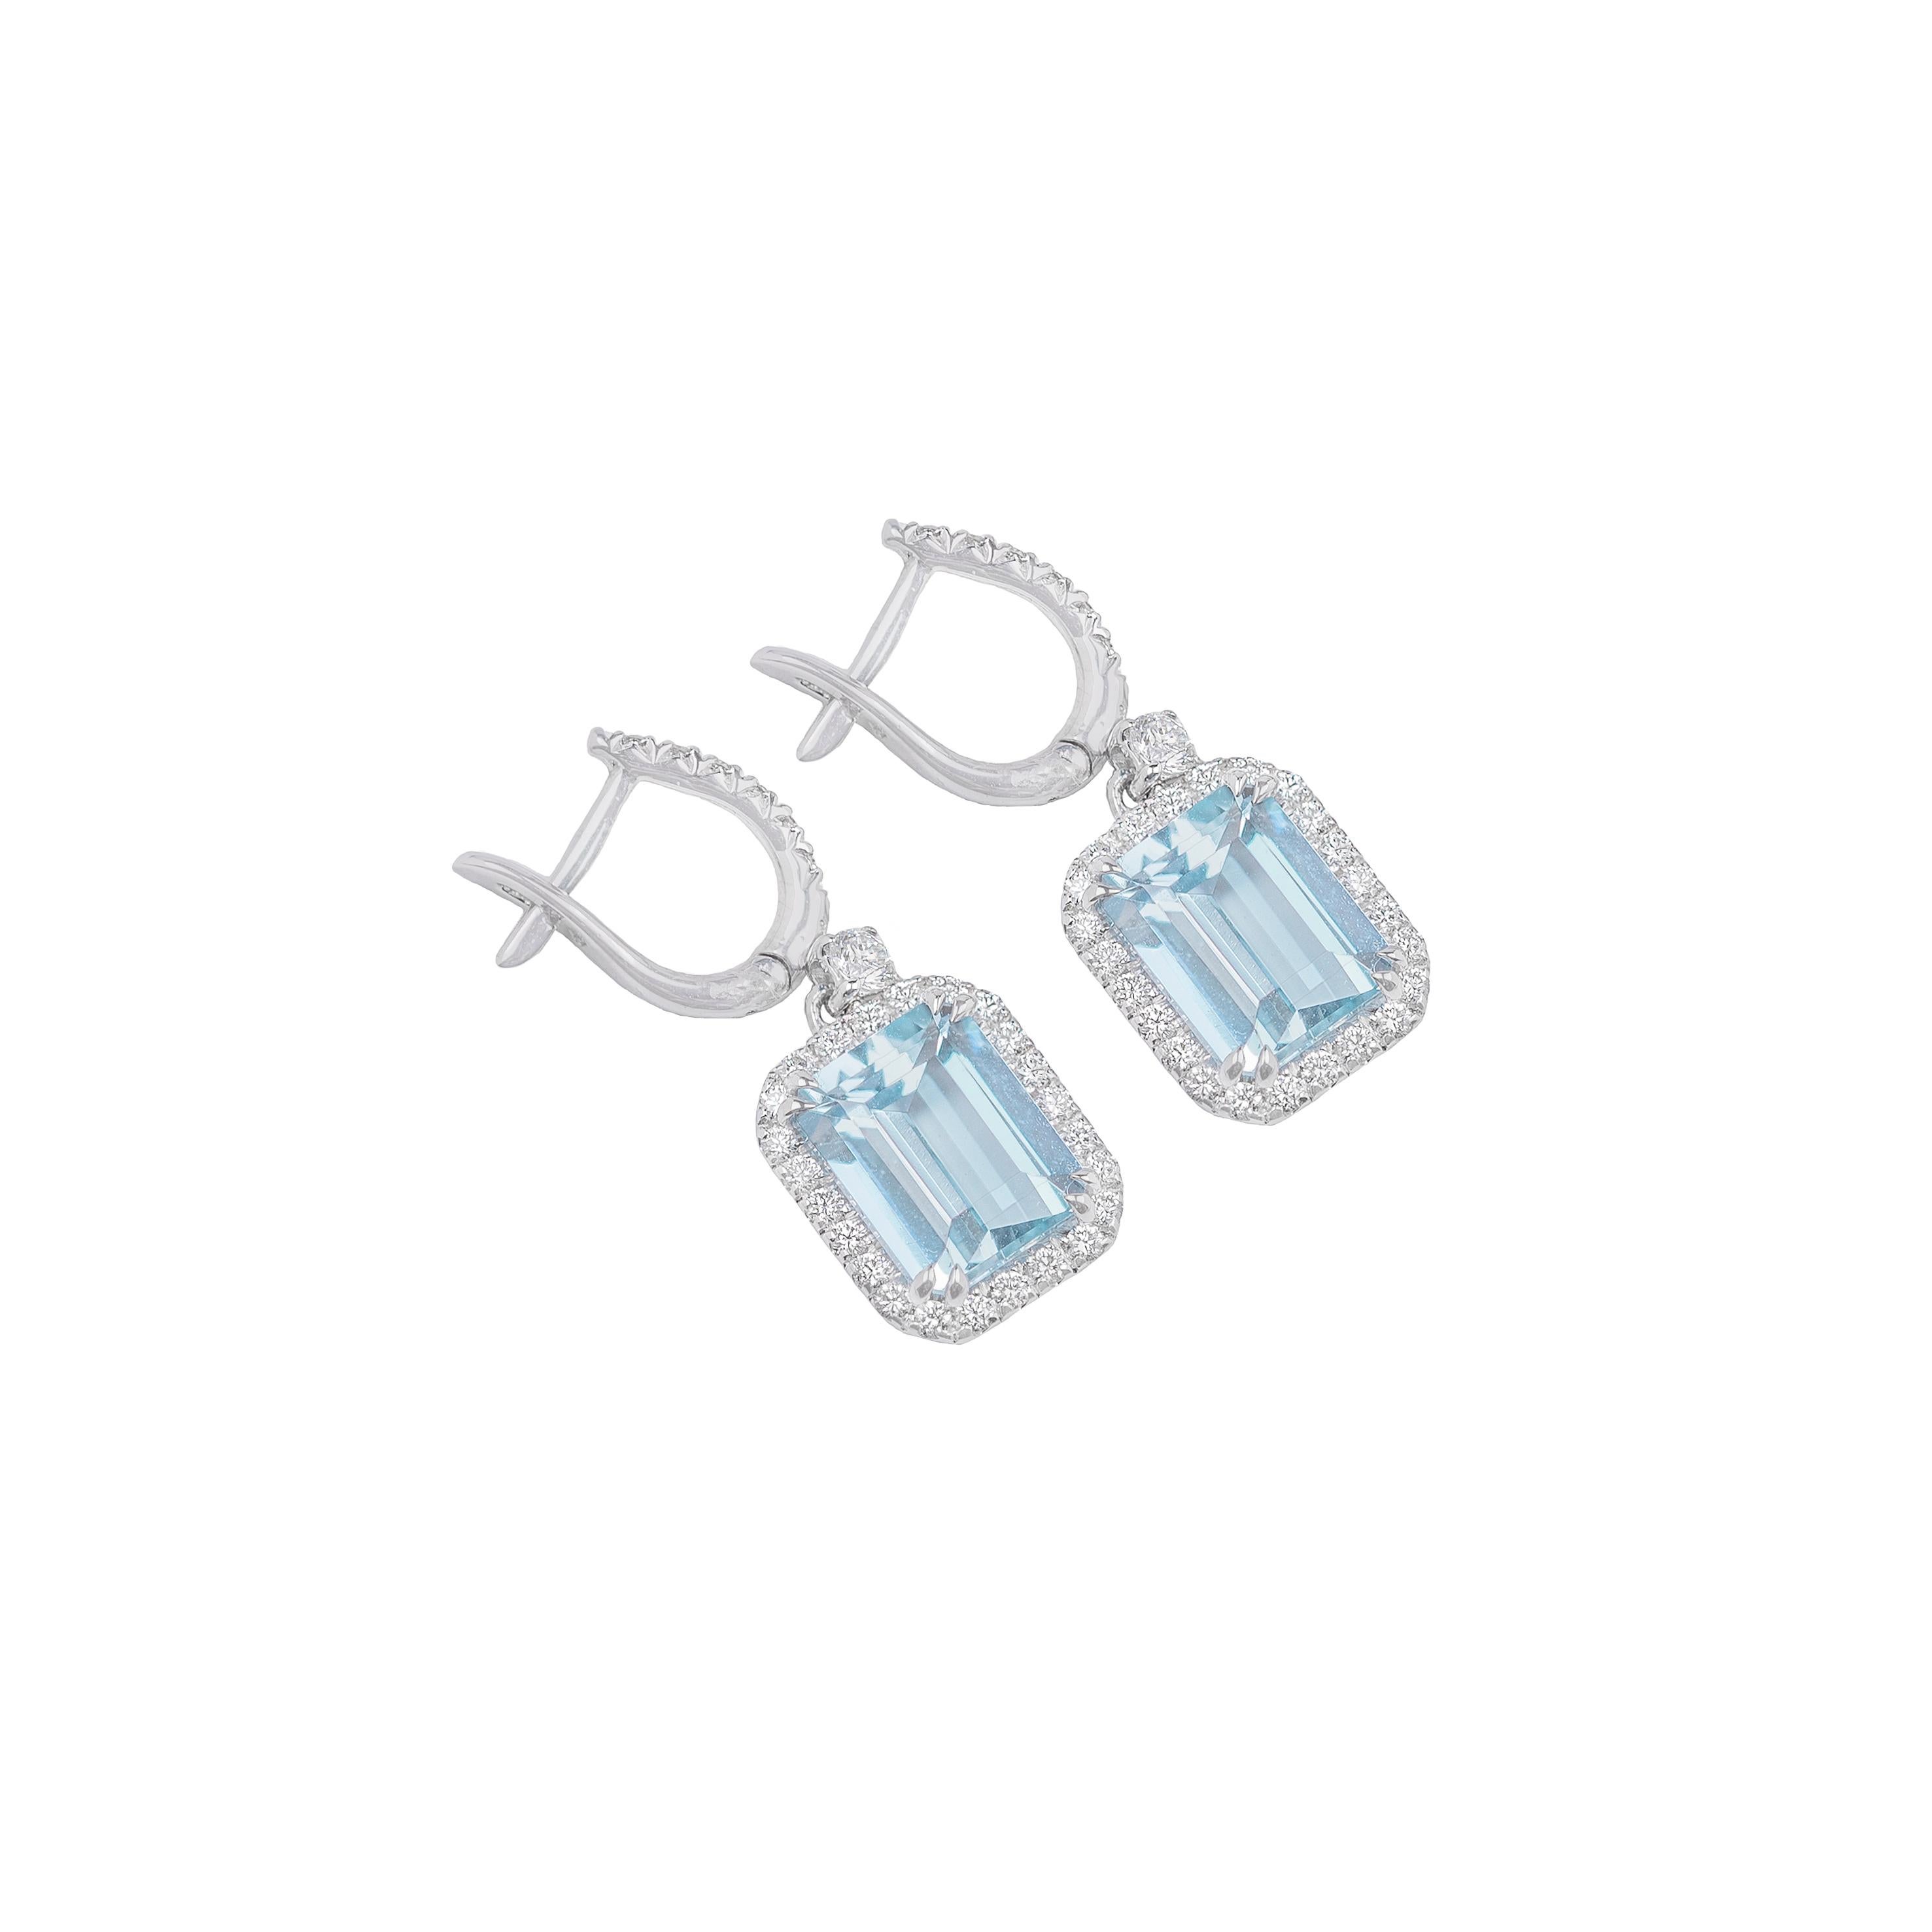 Octagon Cut Aquamarine White Diamonds and 18k White Gold Earrings